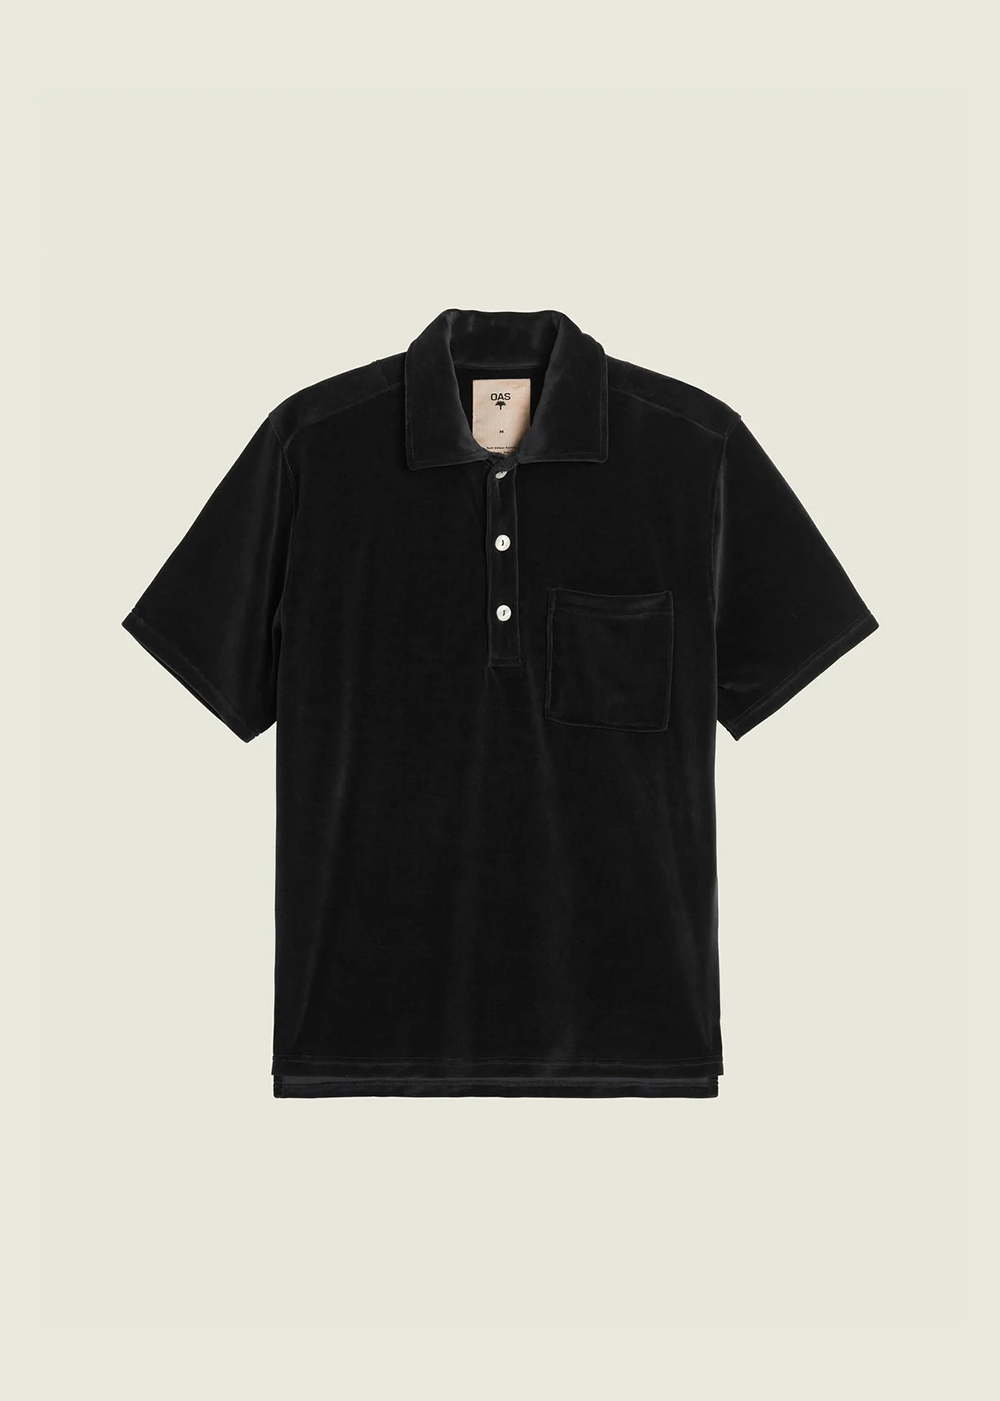 Girona Velour Shirt - OAS Company - Danali -  7011-02